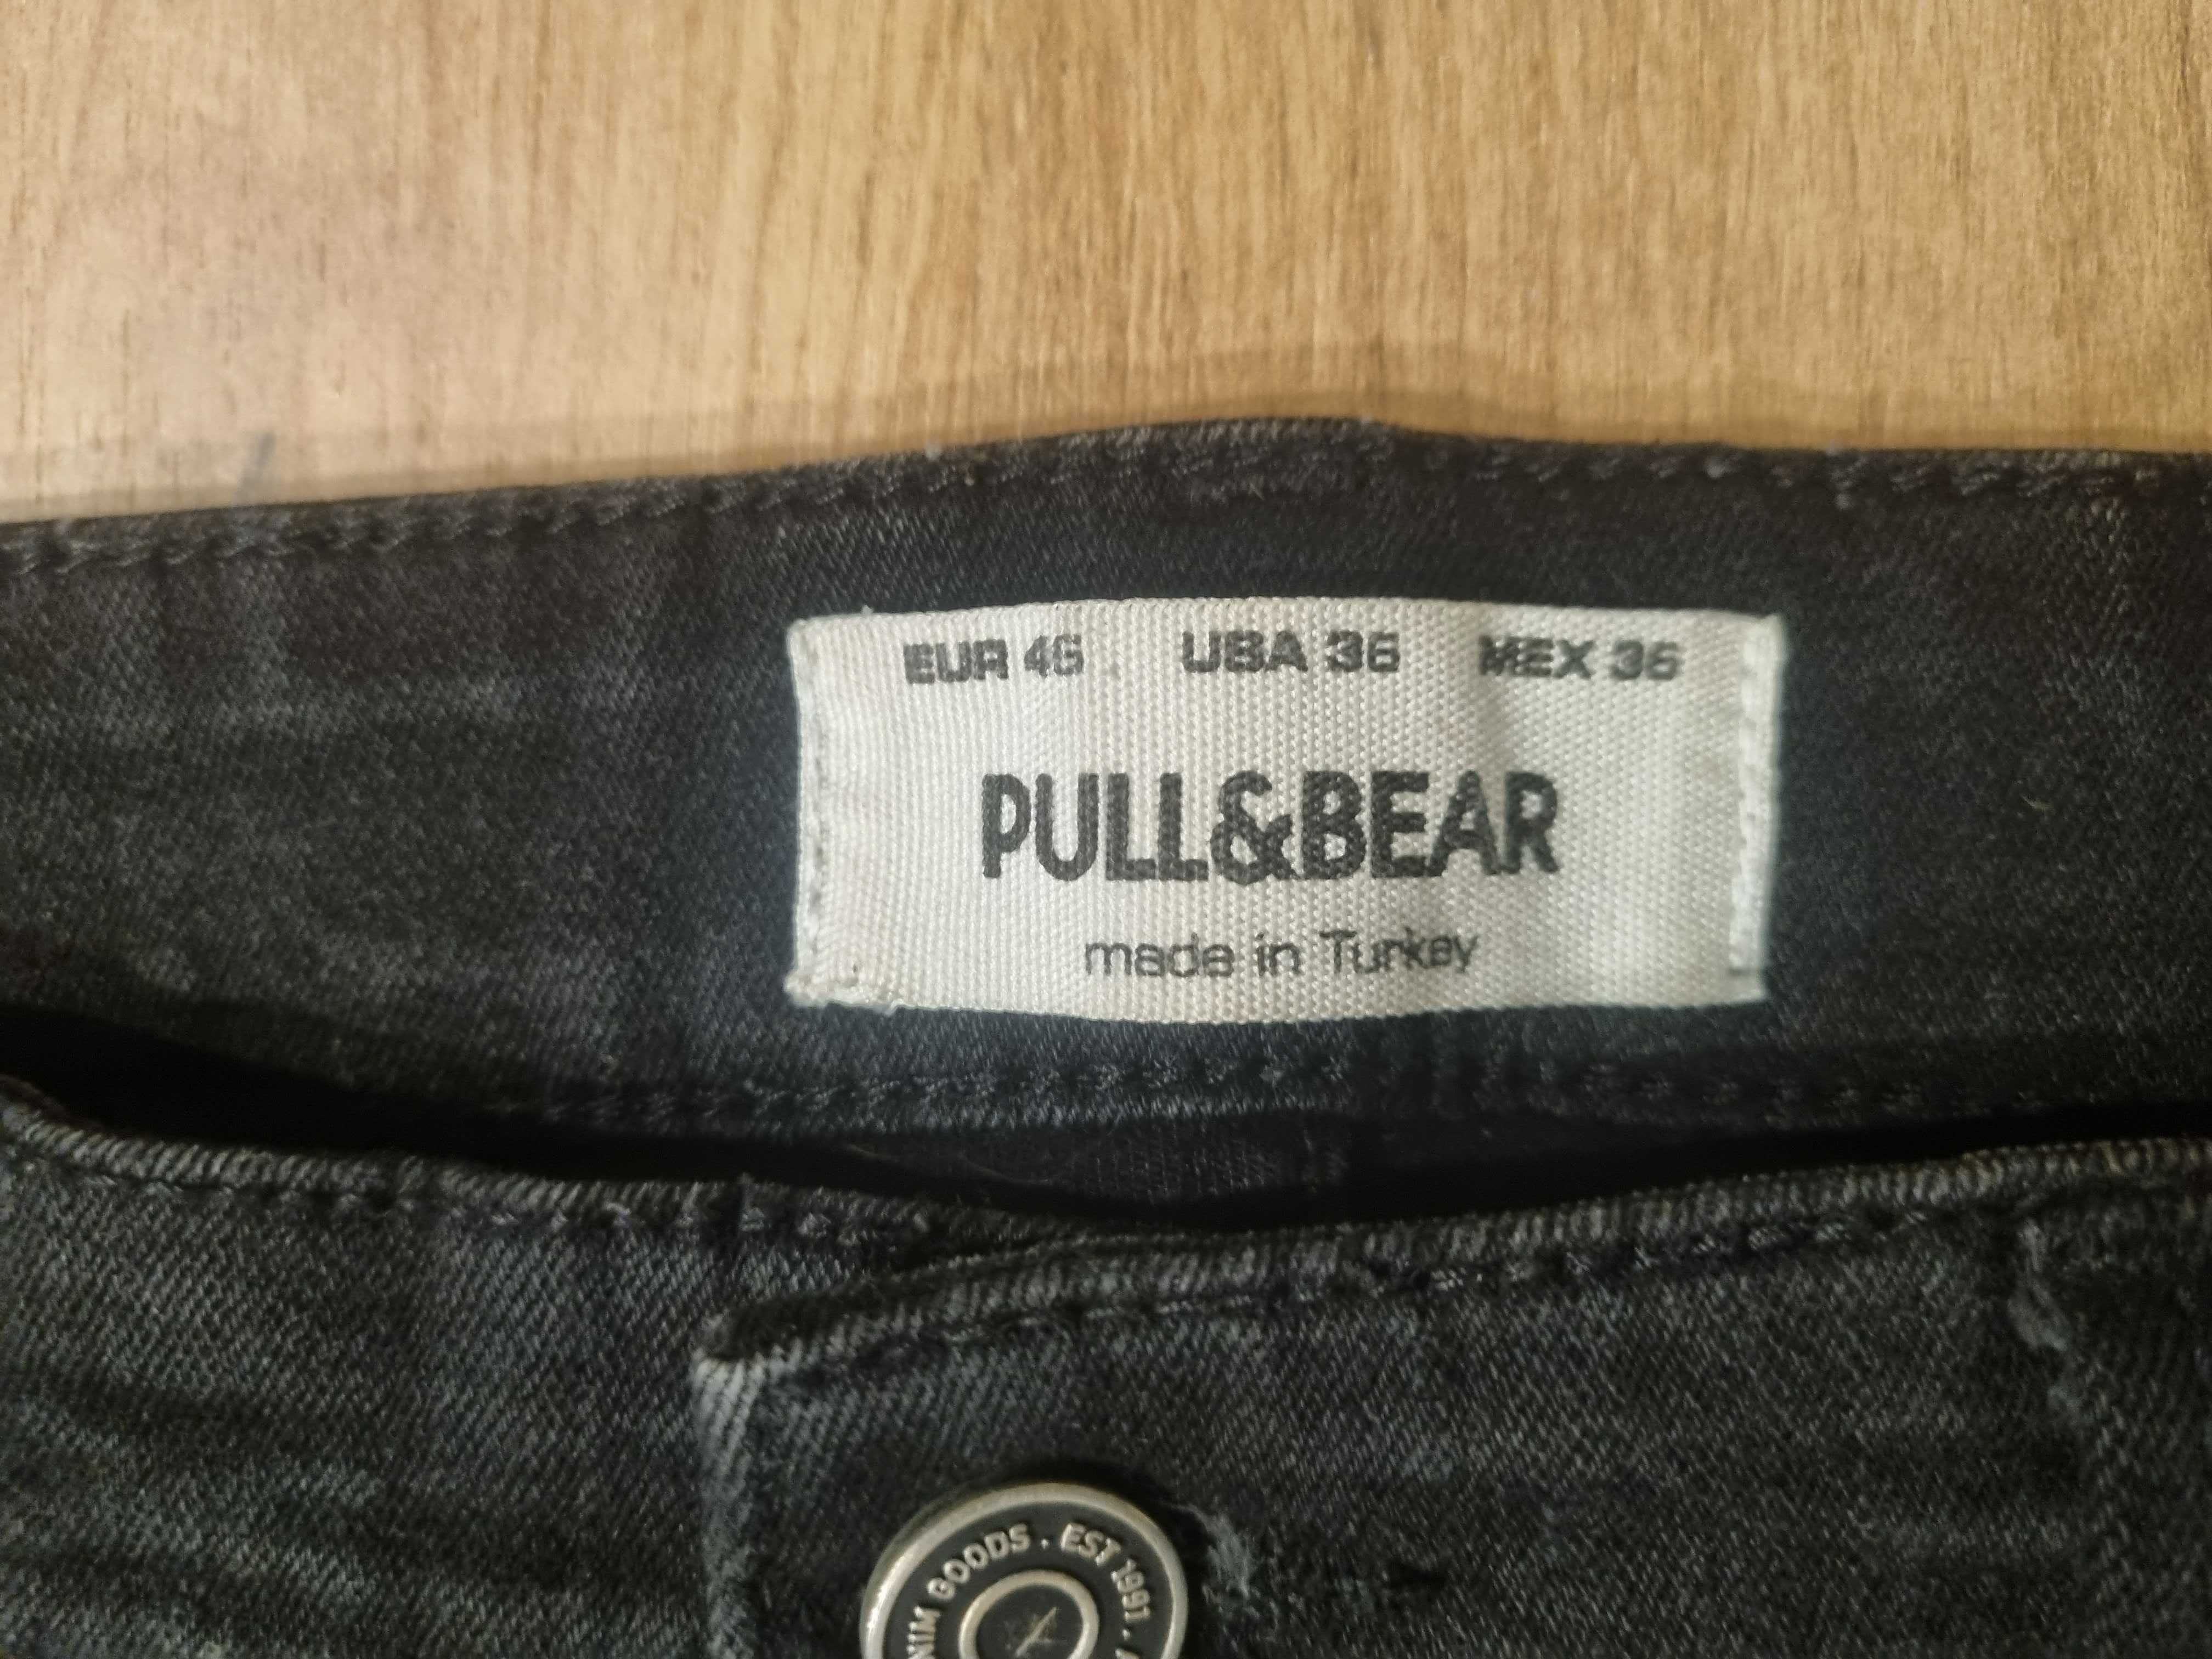 Jeansy spodnie PULL&BEAR - czarne, rozmiar 46, extra modne, NOWE